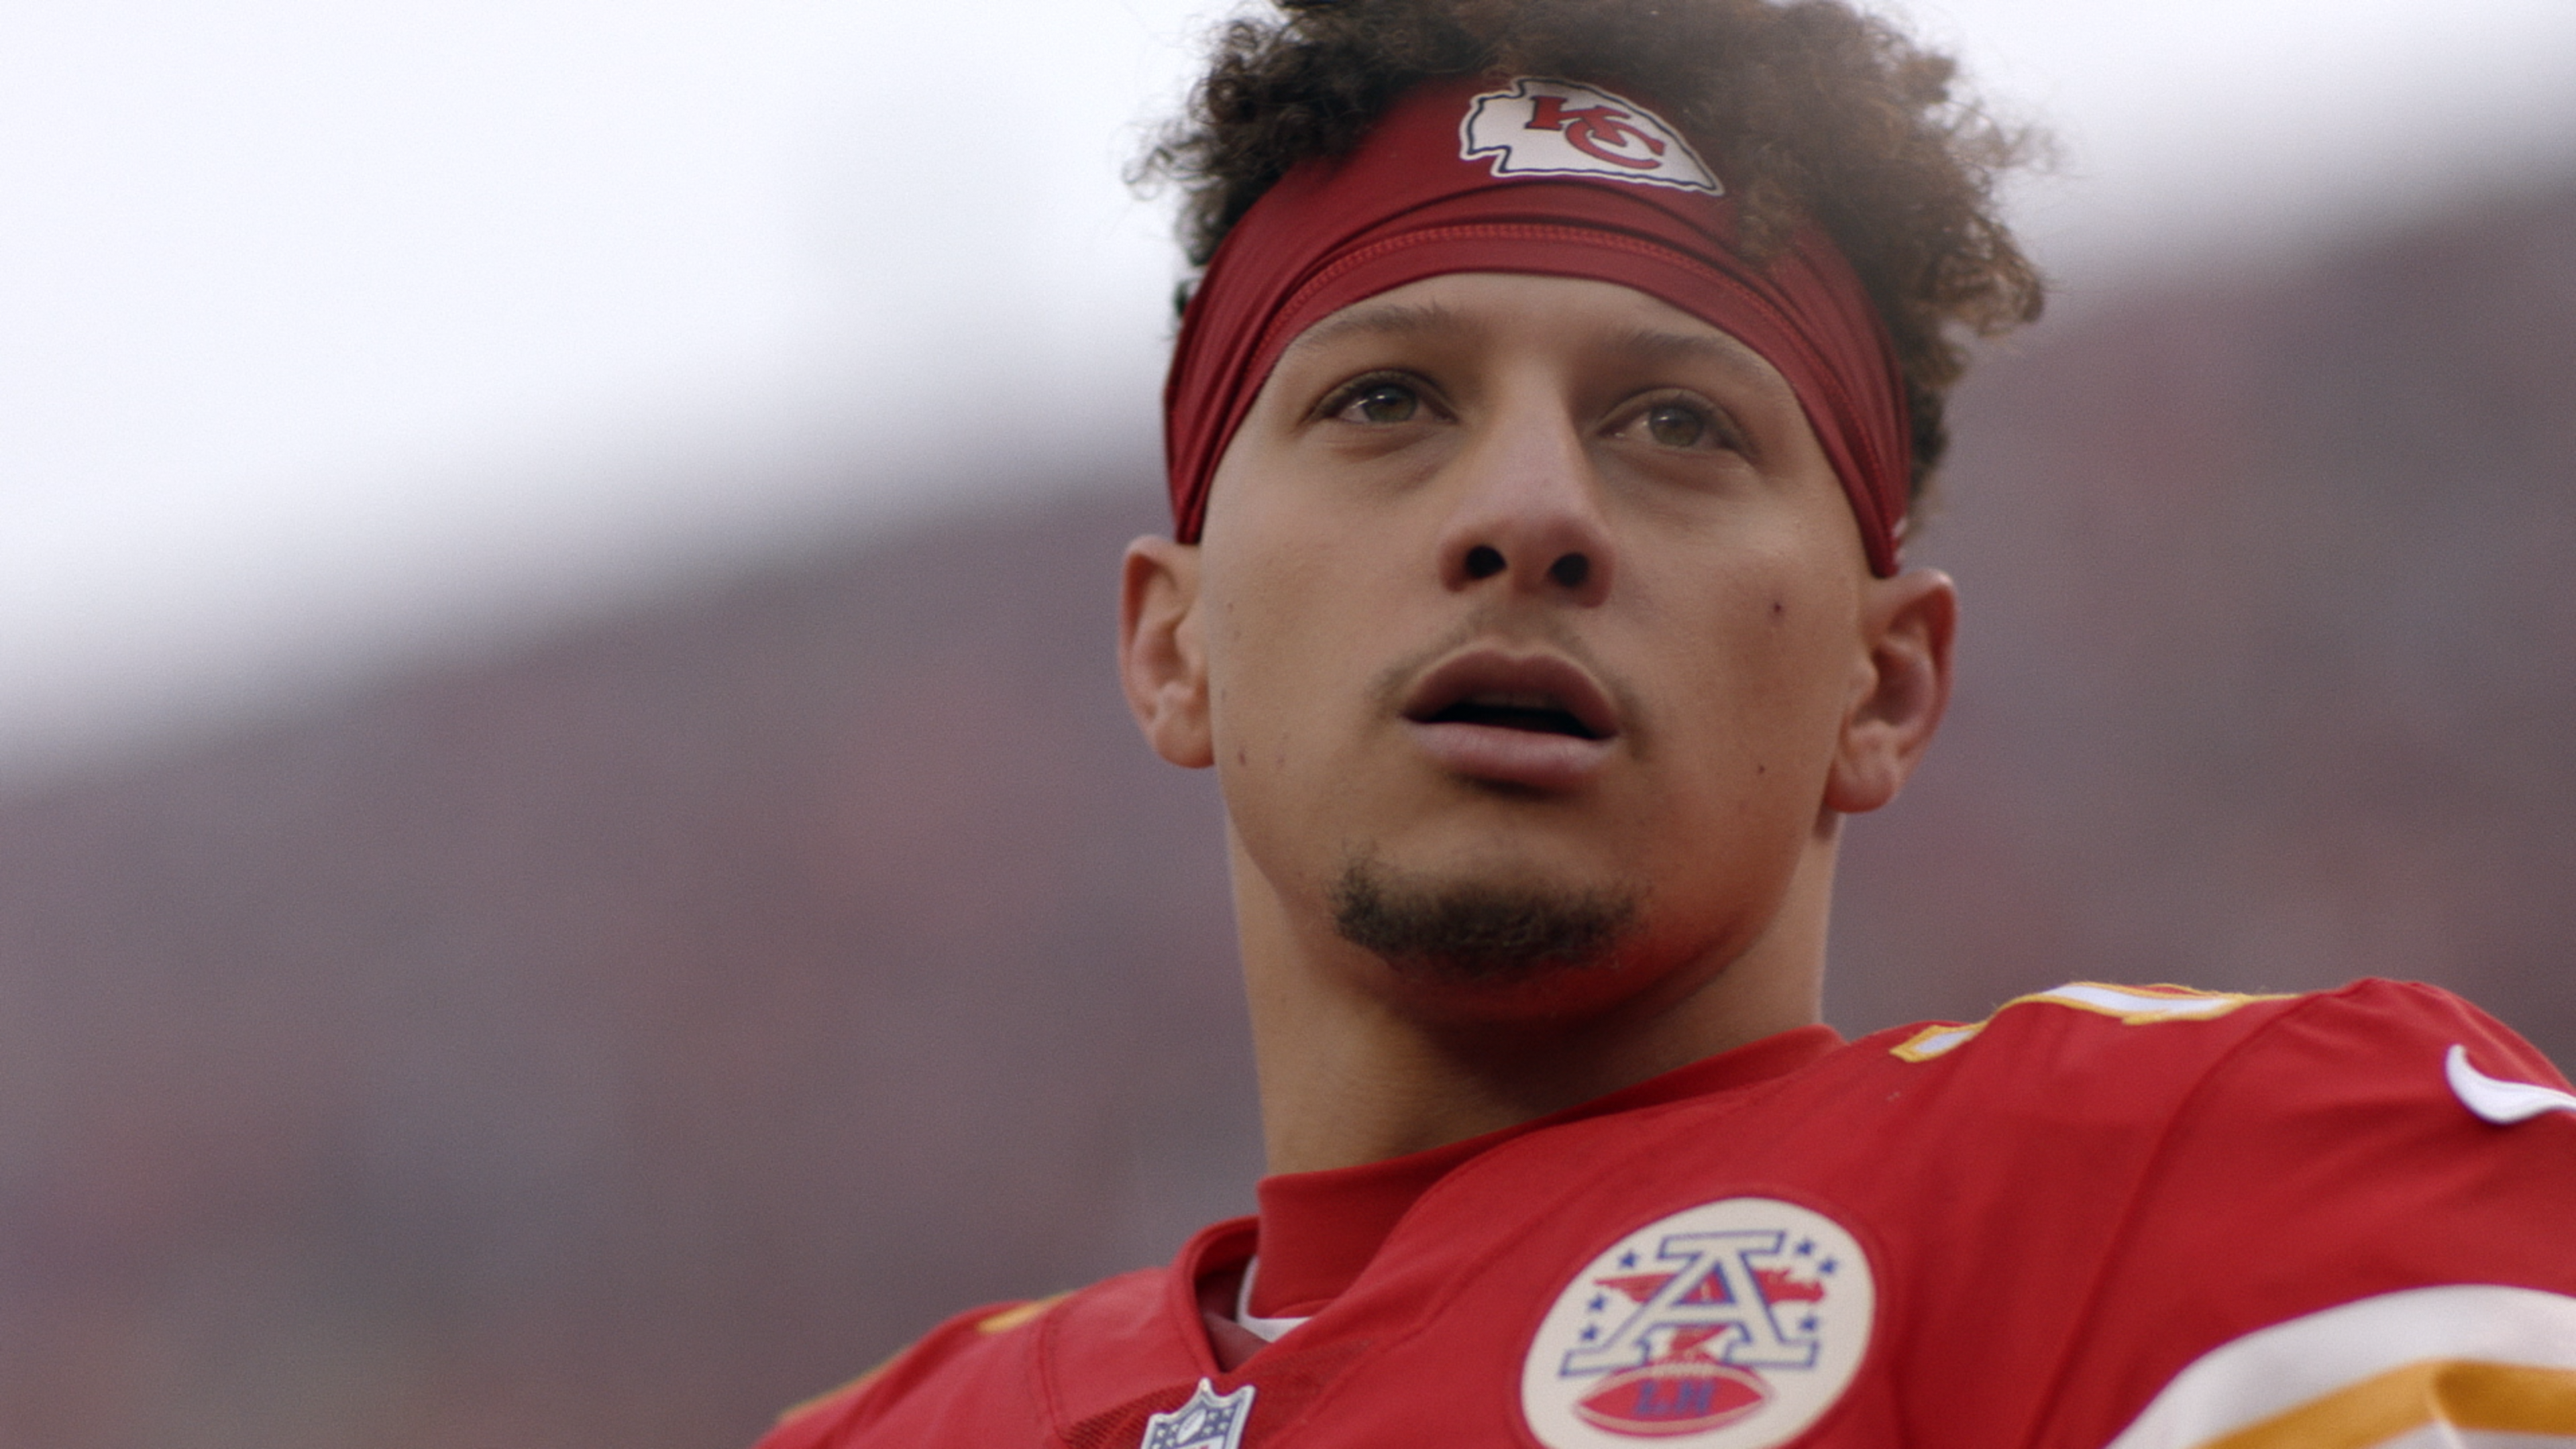 Netflix's 'Quarterback' Documents Lives of Top NFL Players